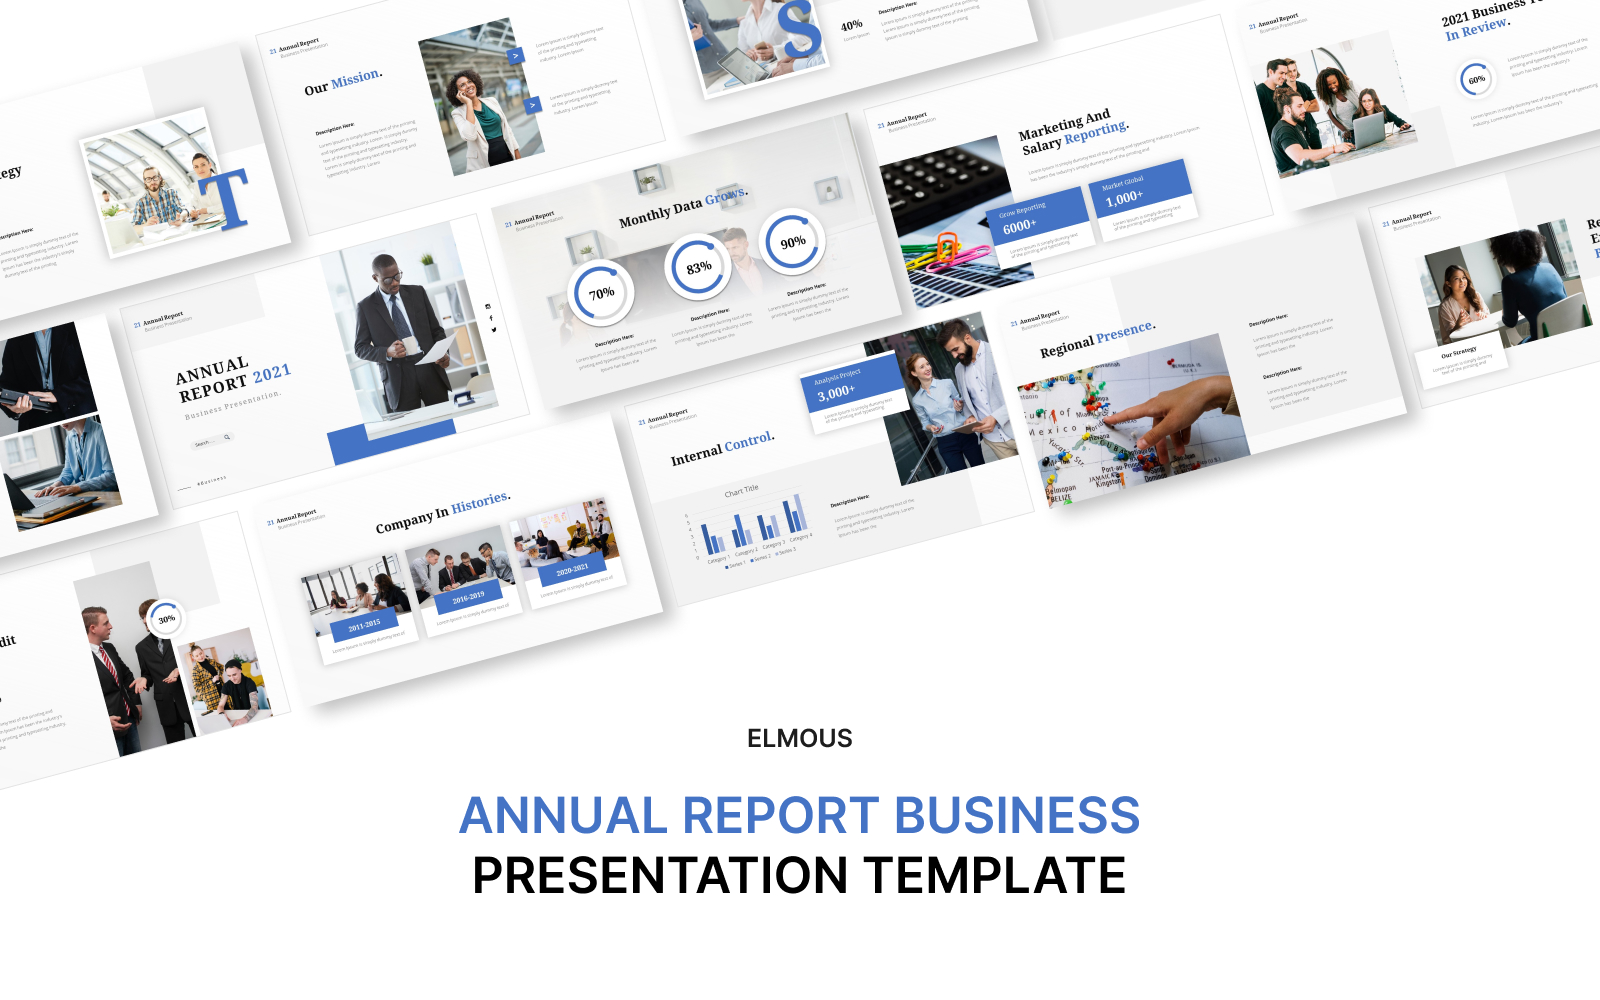 Annual Report - Business Keynote Presentation Template